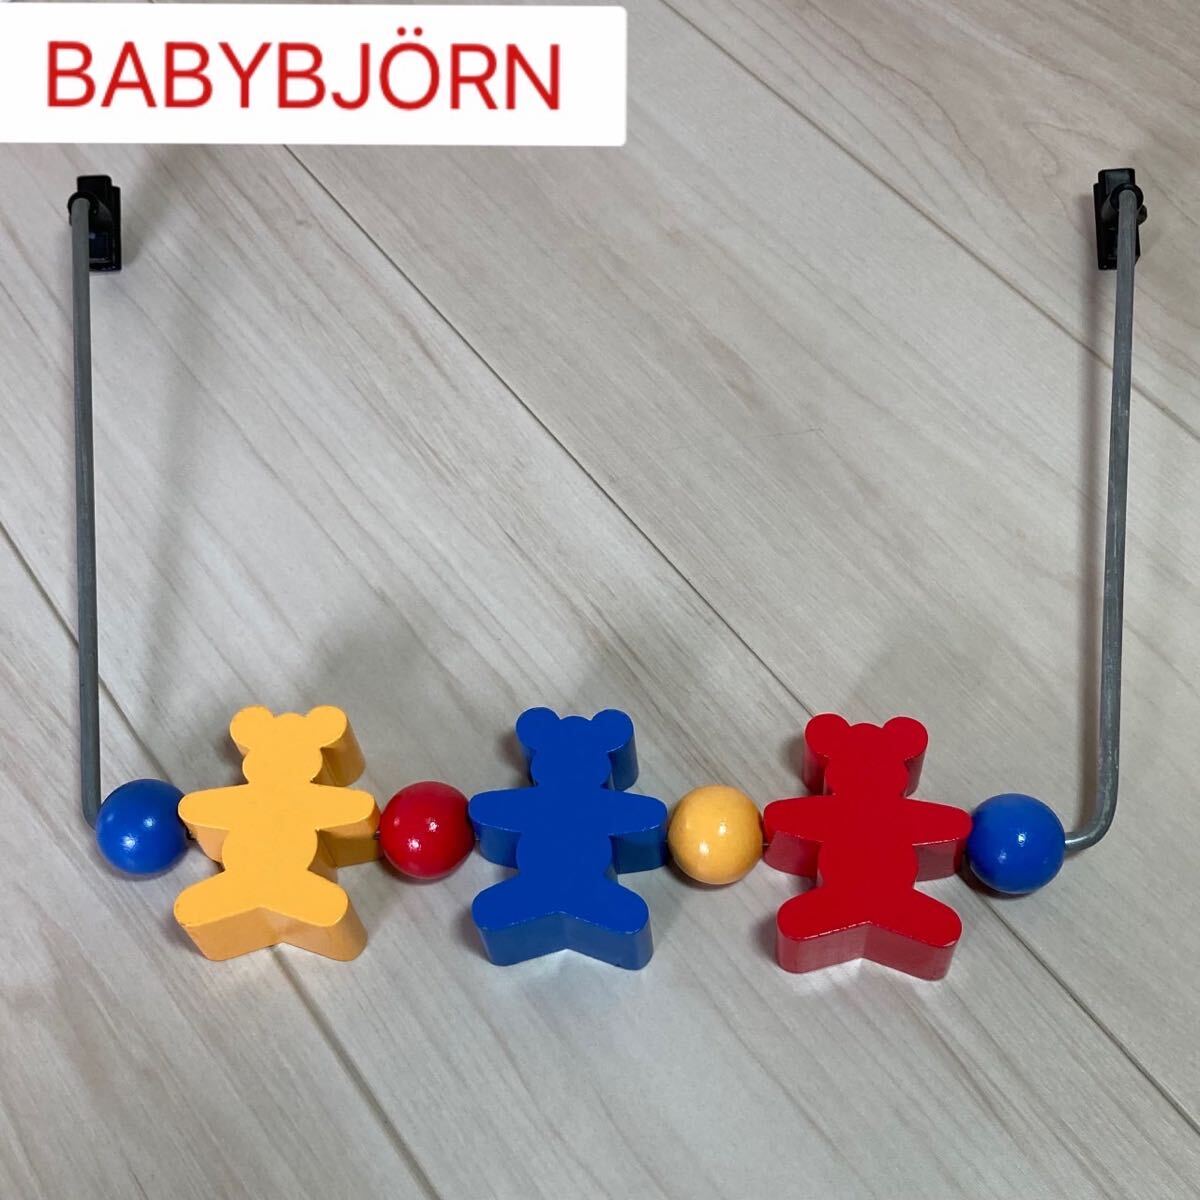 BABYBJORN baby byorun bouncer toy attaching 